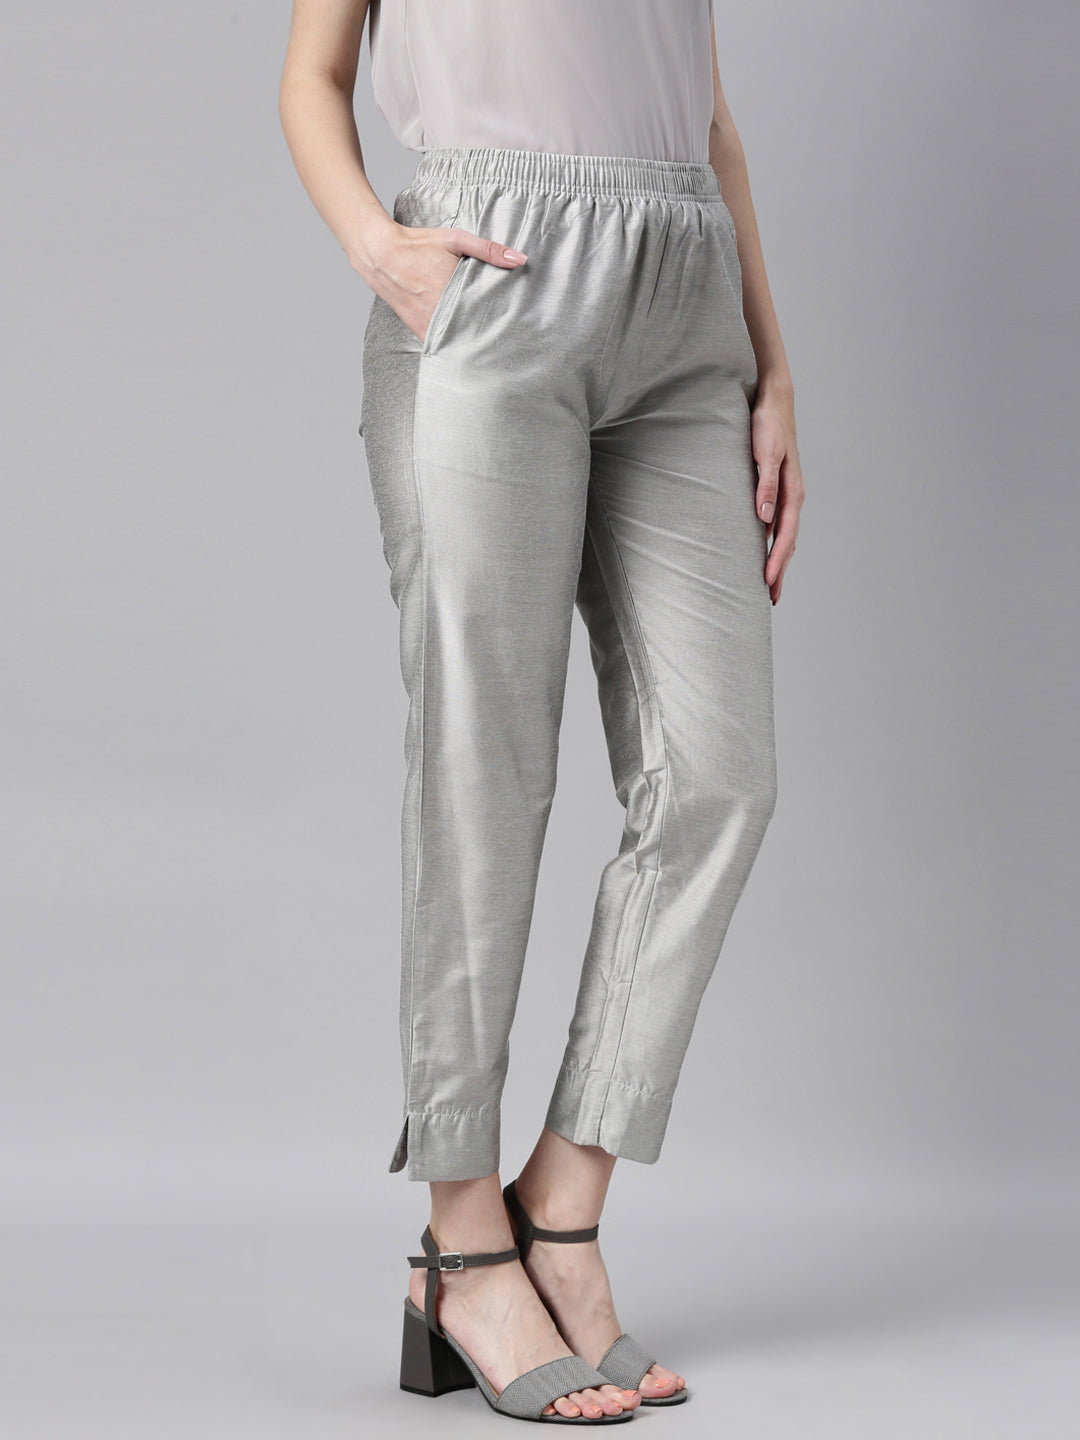 Silver Shimmer Pants Design by Attic Salt at Pernias Pop Up Shop 2023